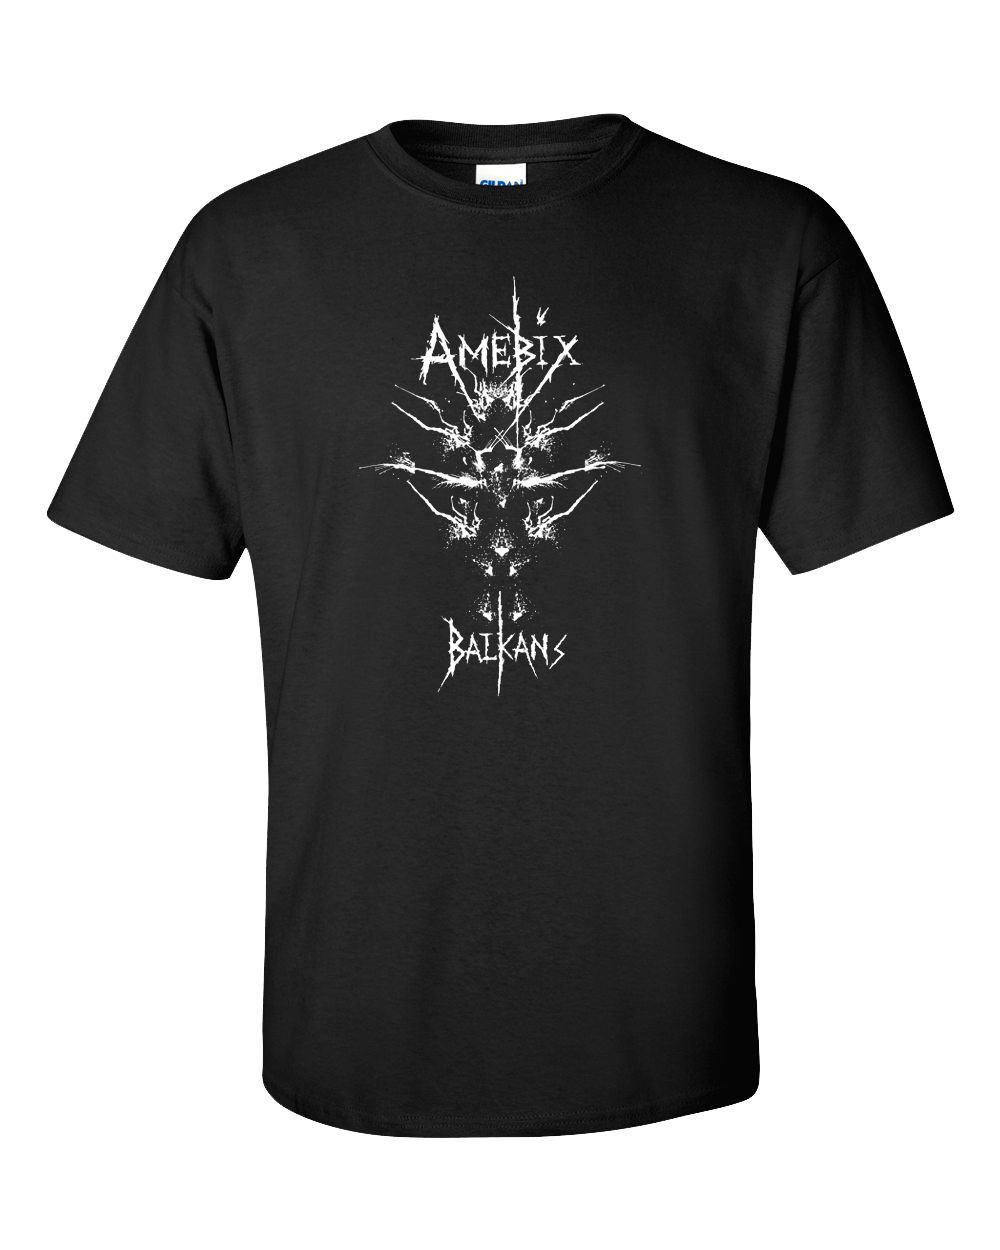 Amebix T Shirt Crust Punk Hardcore Music Band Balkans No Gods No ...